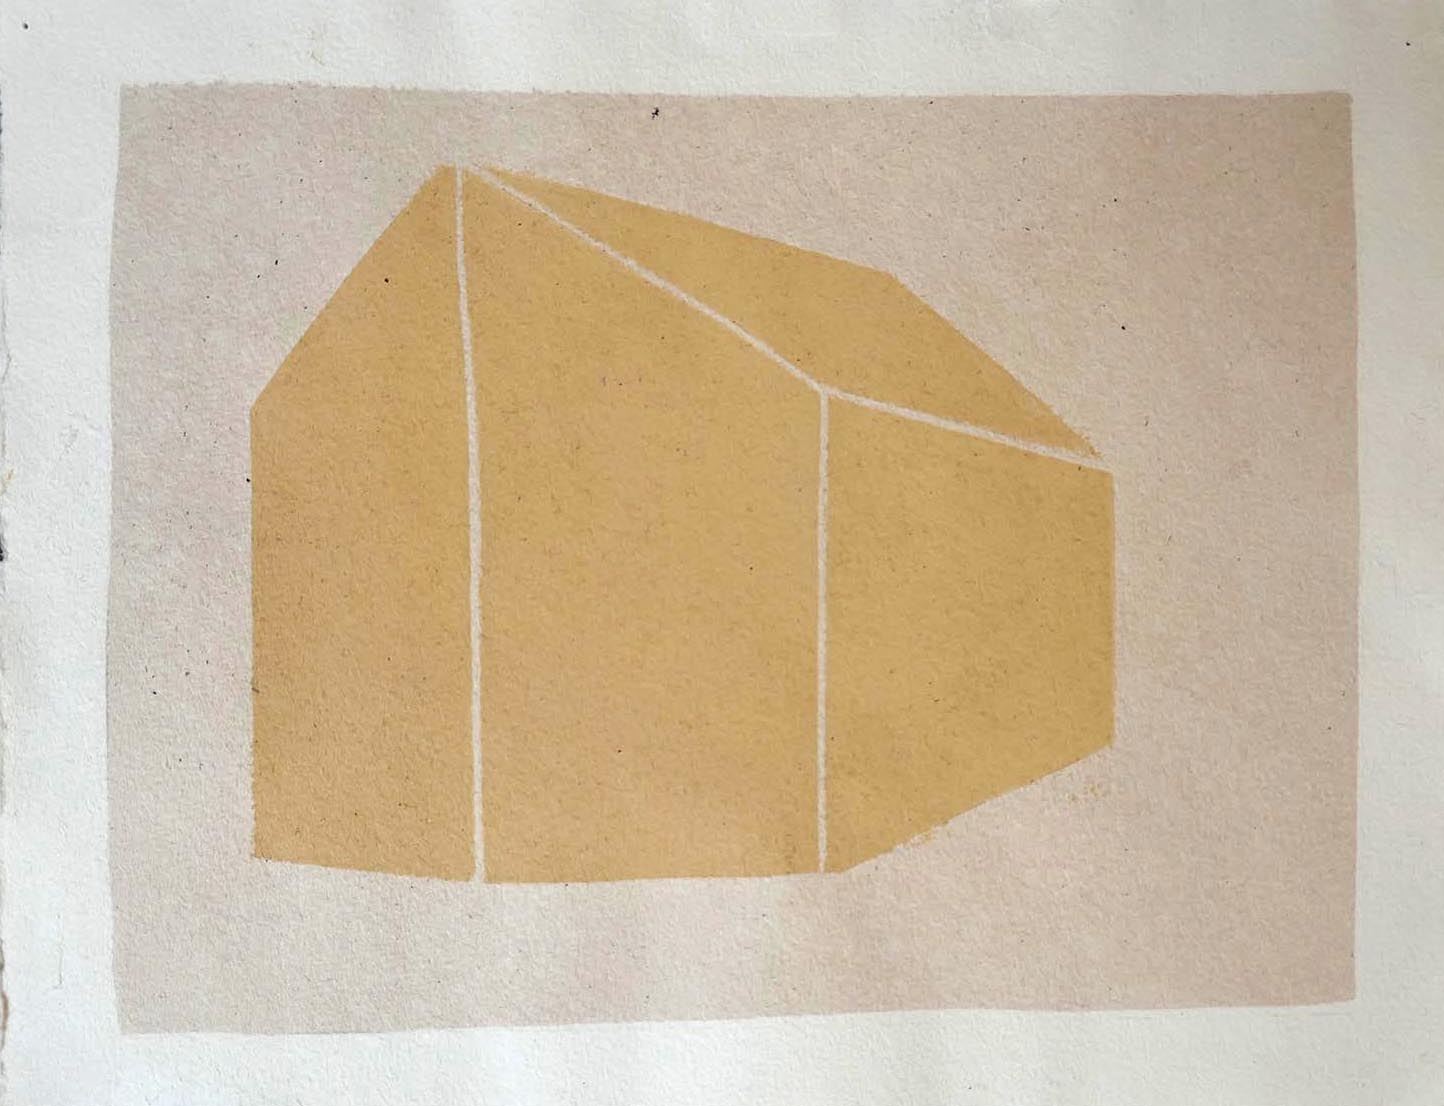 Architecture végétale 4, 2020, monotype on dyed paper (elderberry), image size 13,4x18,4 cm, paper size 17,3x22 cm, edition of 1jpg